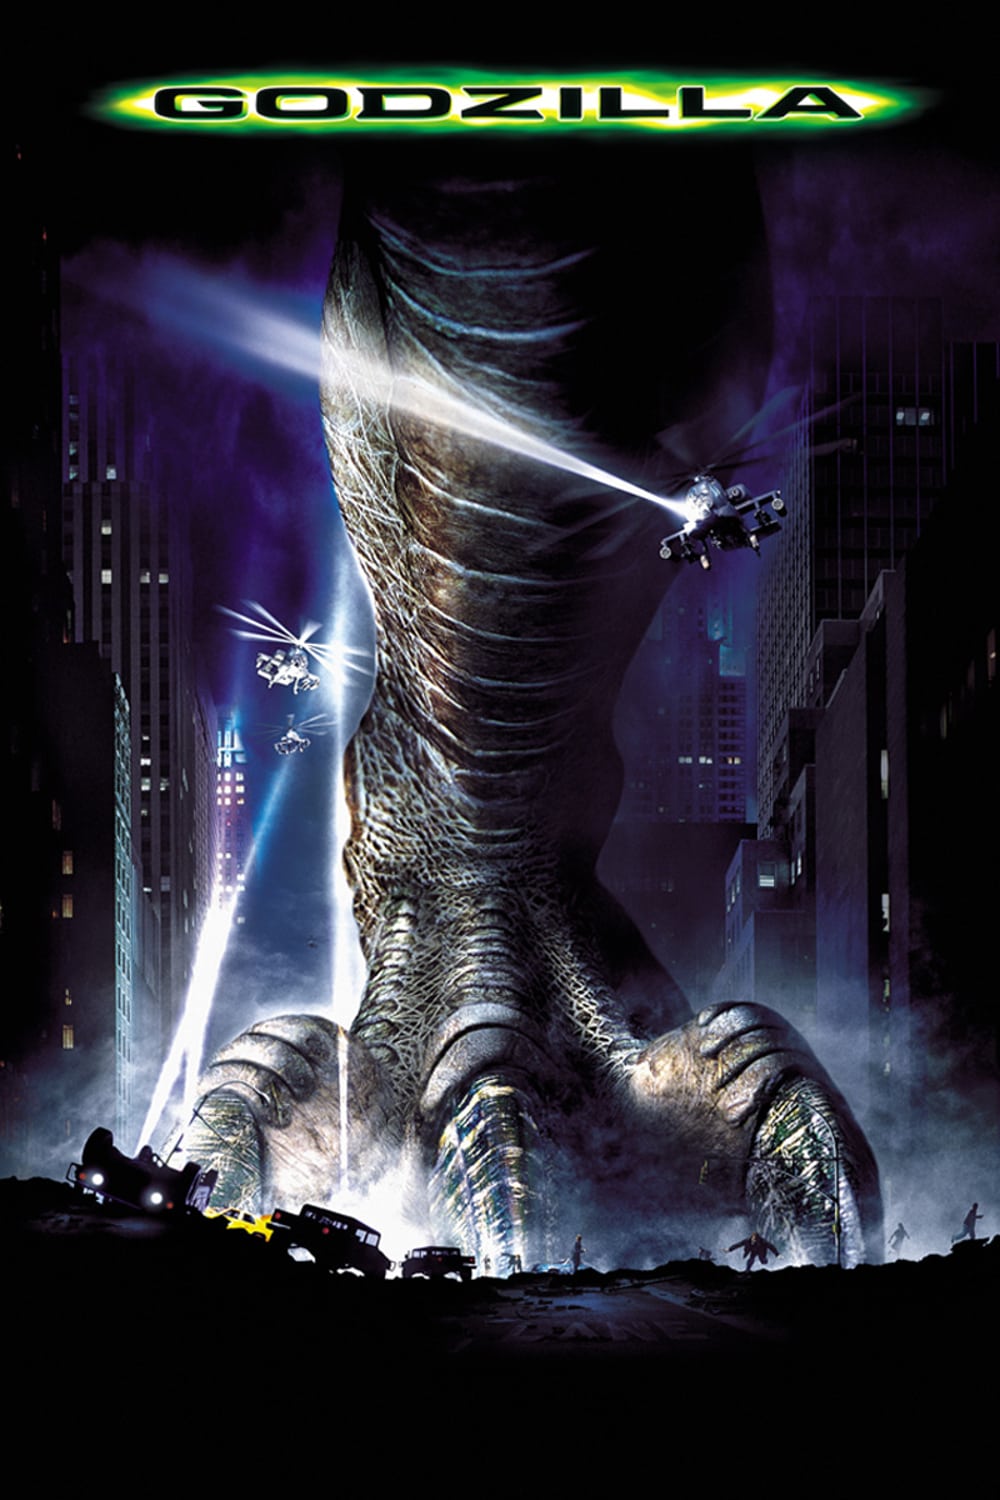 Plakat von "Godzilla"